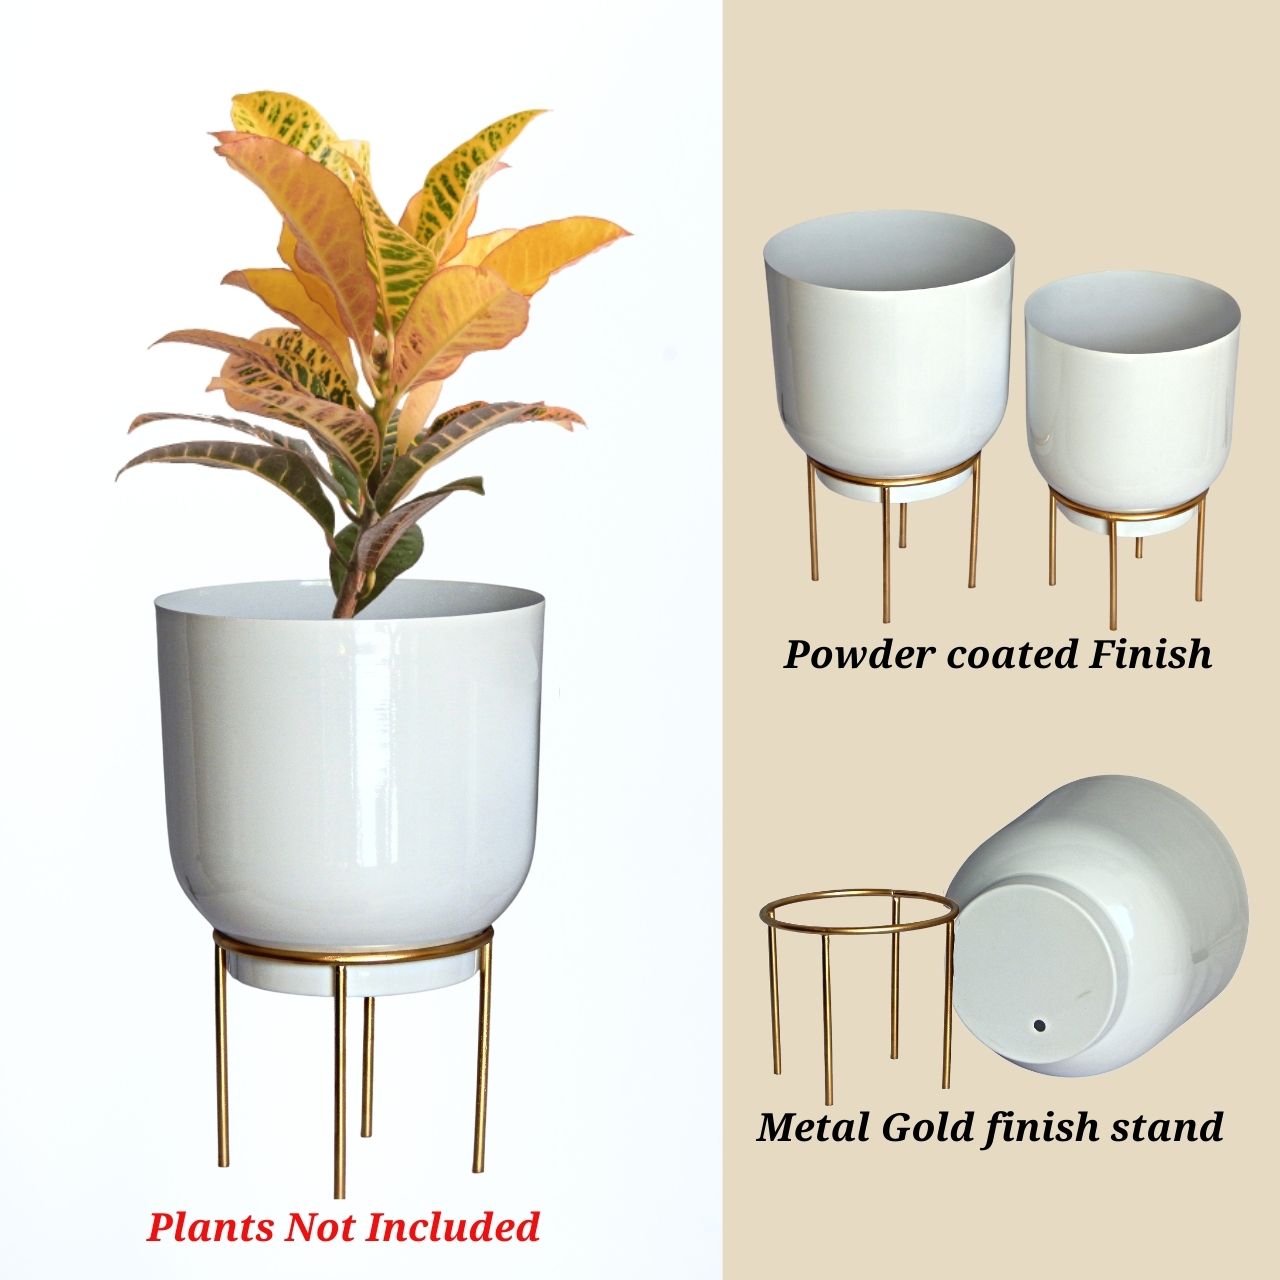 
                  
                    ecofynd White Eva Metal Plant Pot with Stand (Set of 2)
                  
                